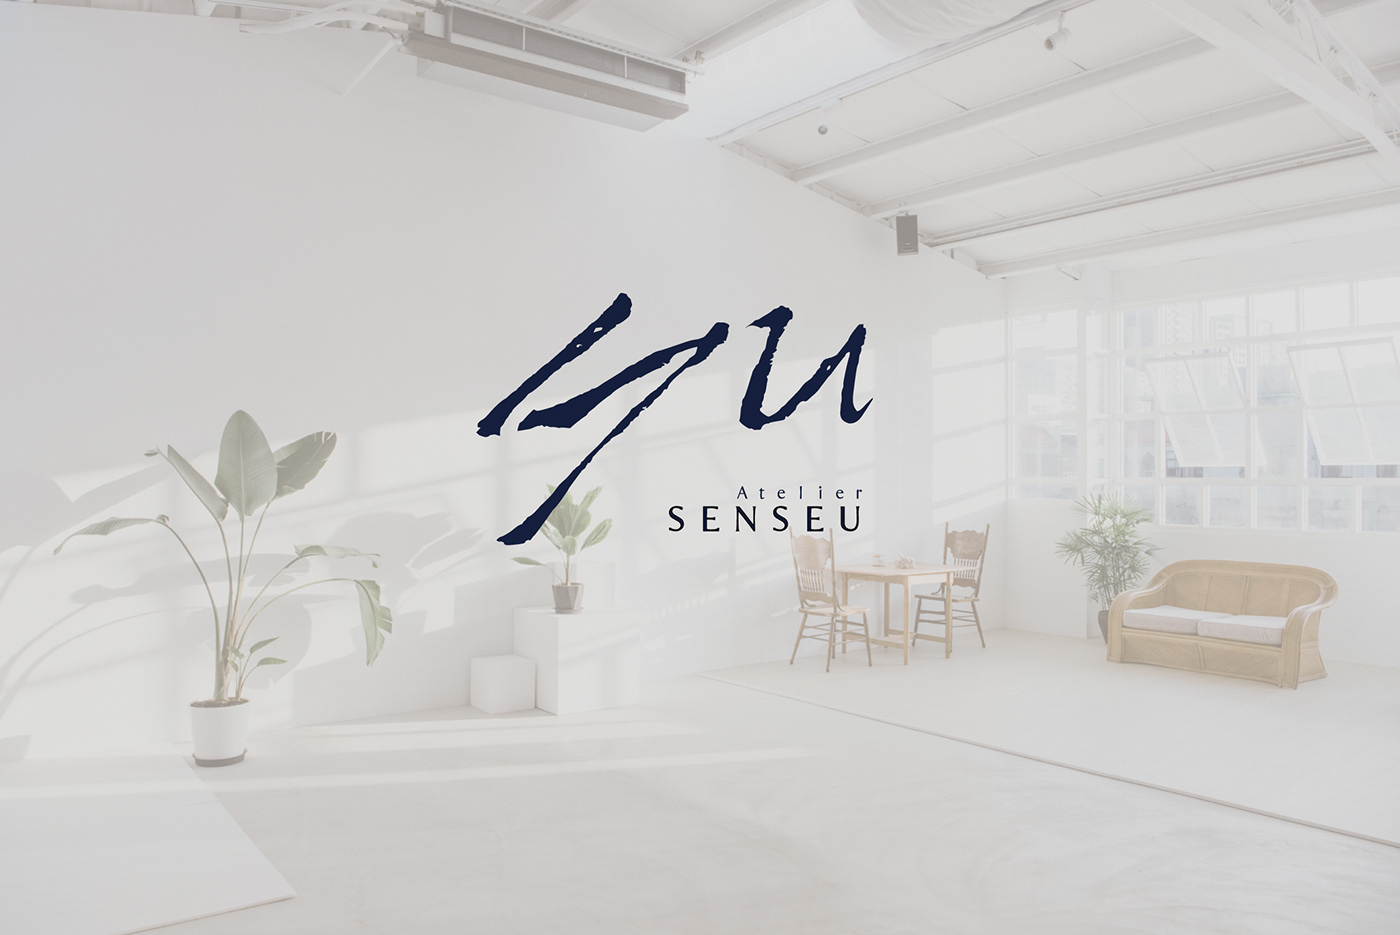 SENSEU Atelier Siwei Design taichung 四維品牌整合設計 四維設計 台中攝影工作室